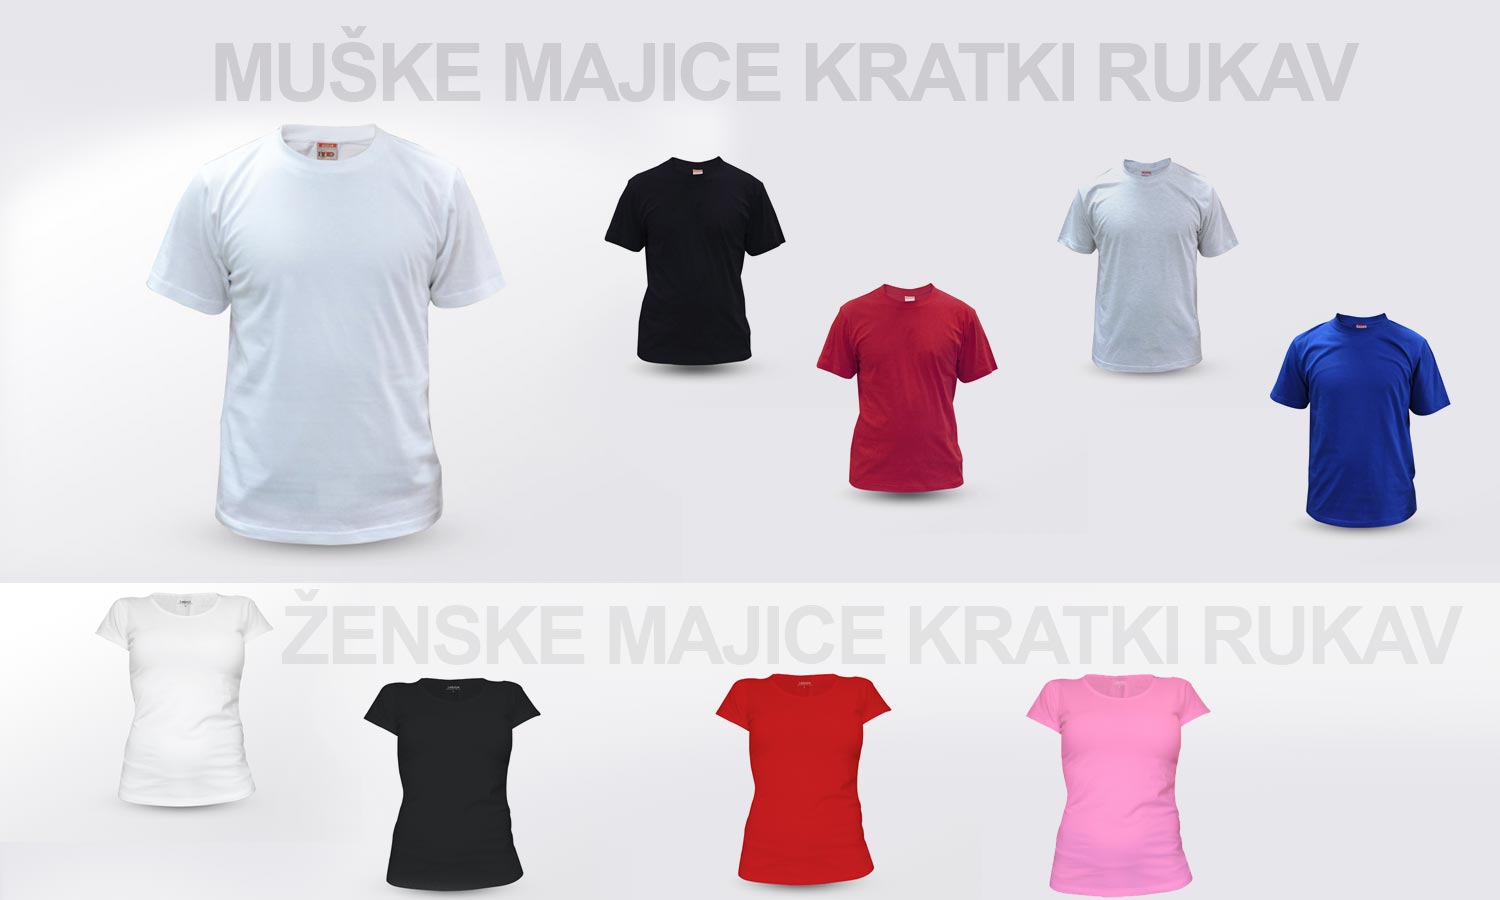 Majica Beast Mode Gym, T-Shirt Muška, Ženska i Dječji model 150g. TS004